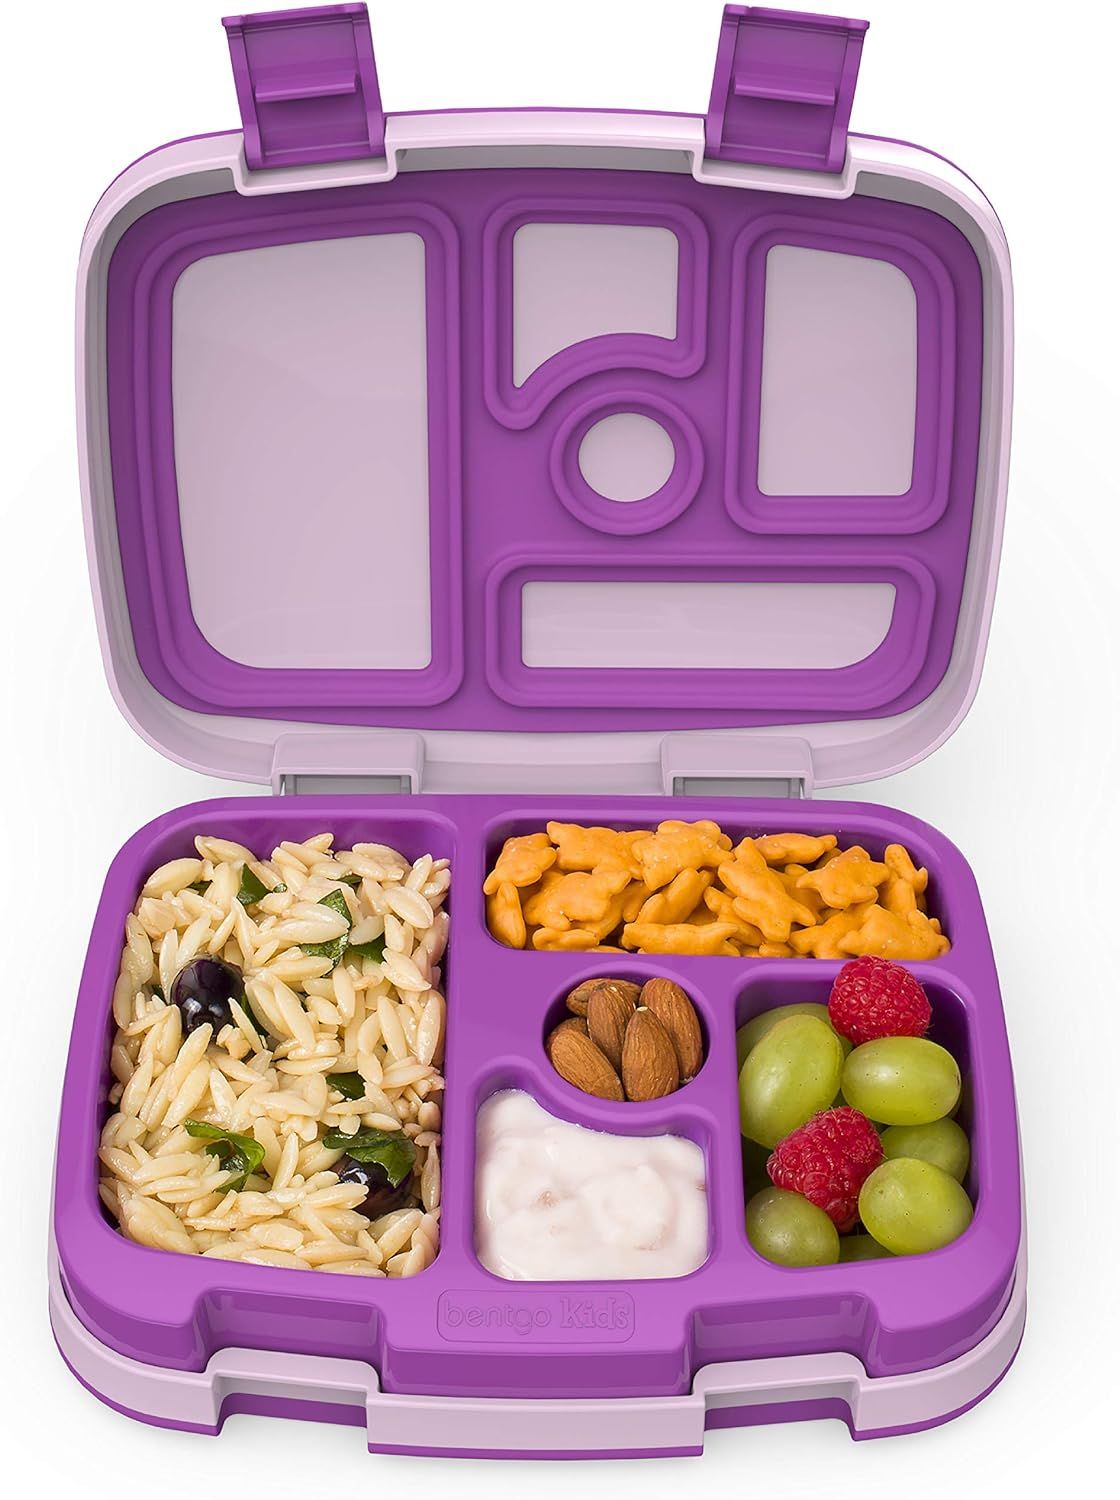 Bentgo Kids Children’s Lunch Box - Leak-Proof, 5-Compartment Bento-Style Kids Lunch Box - Ideal... | Amazon (US)